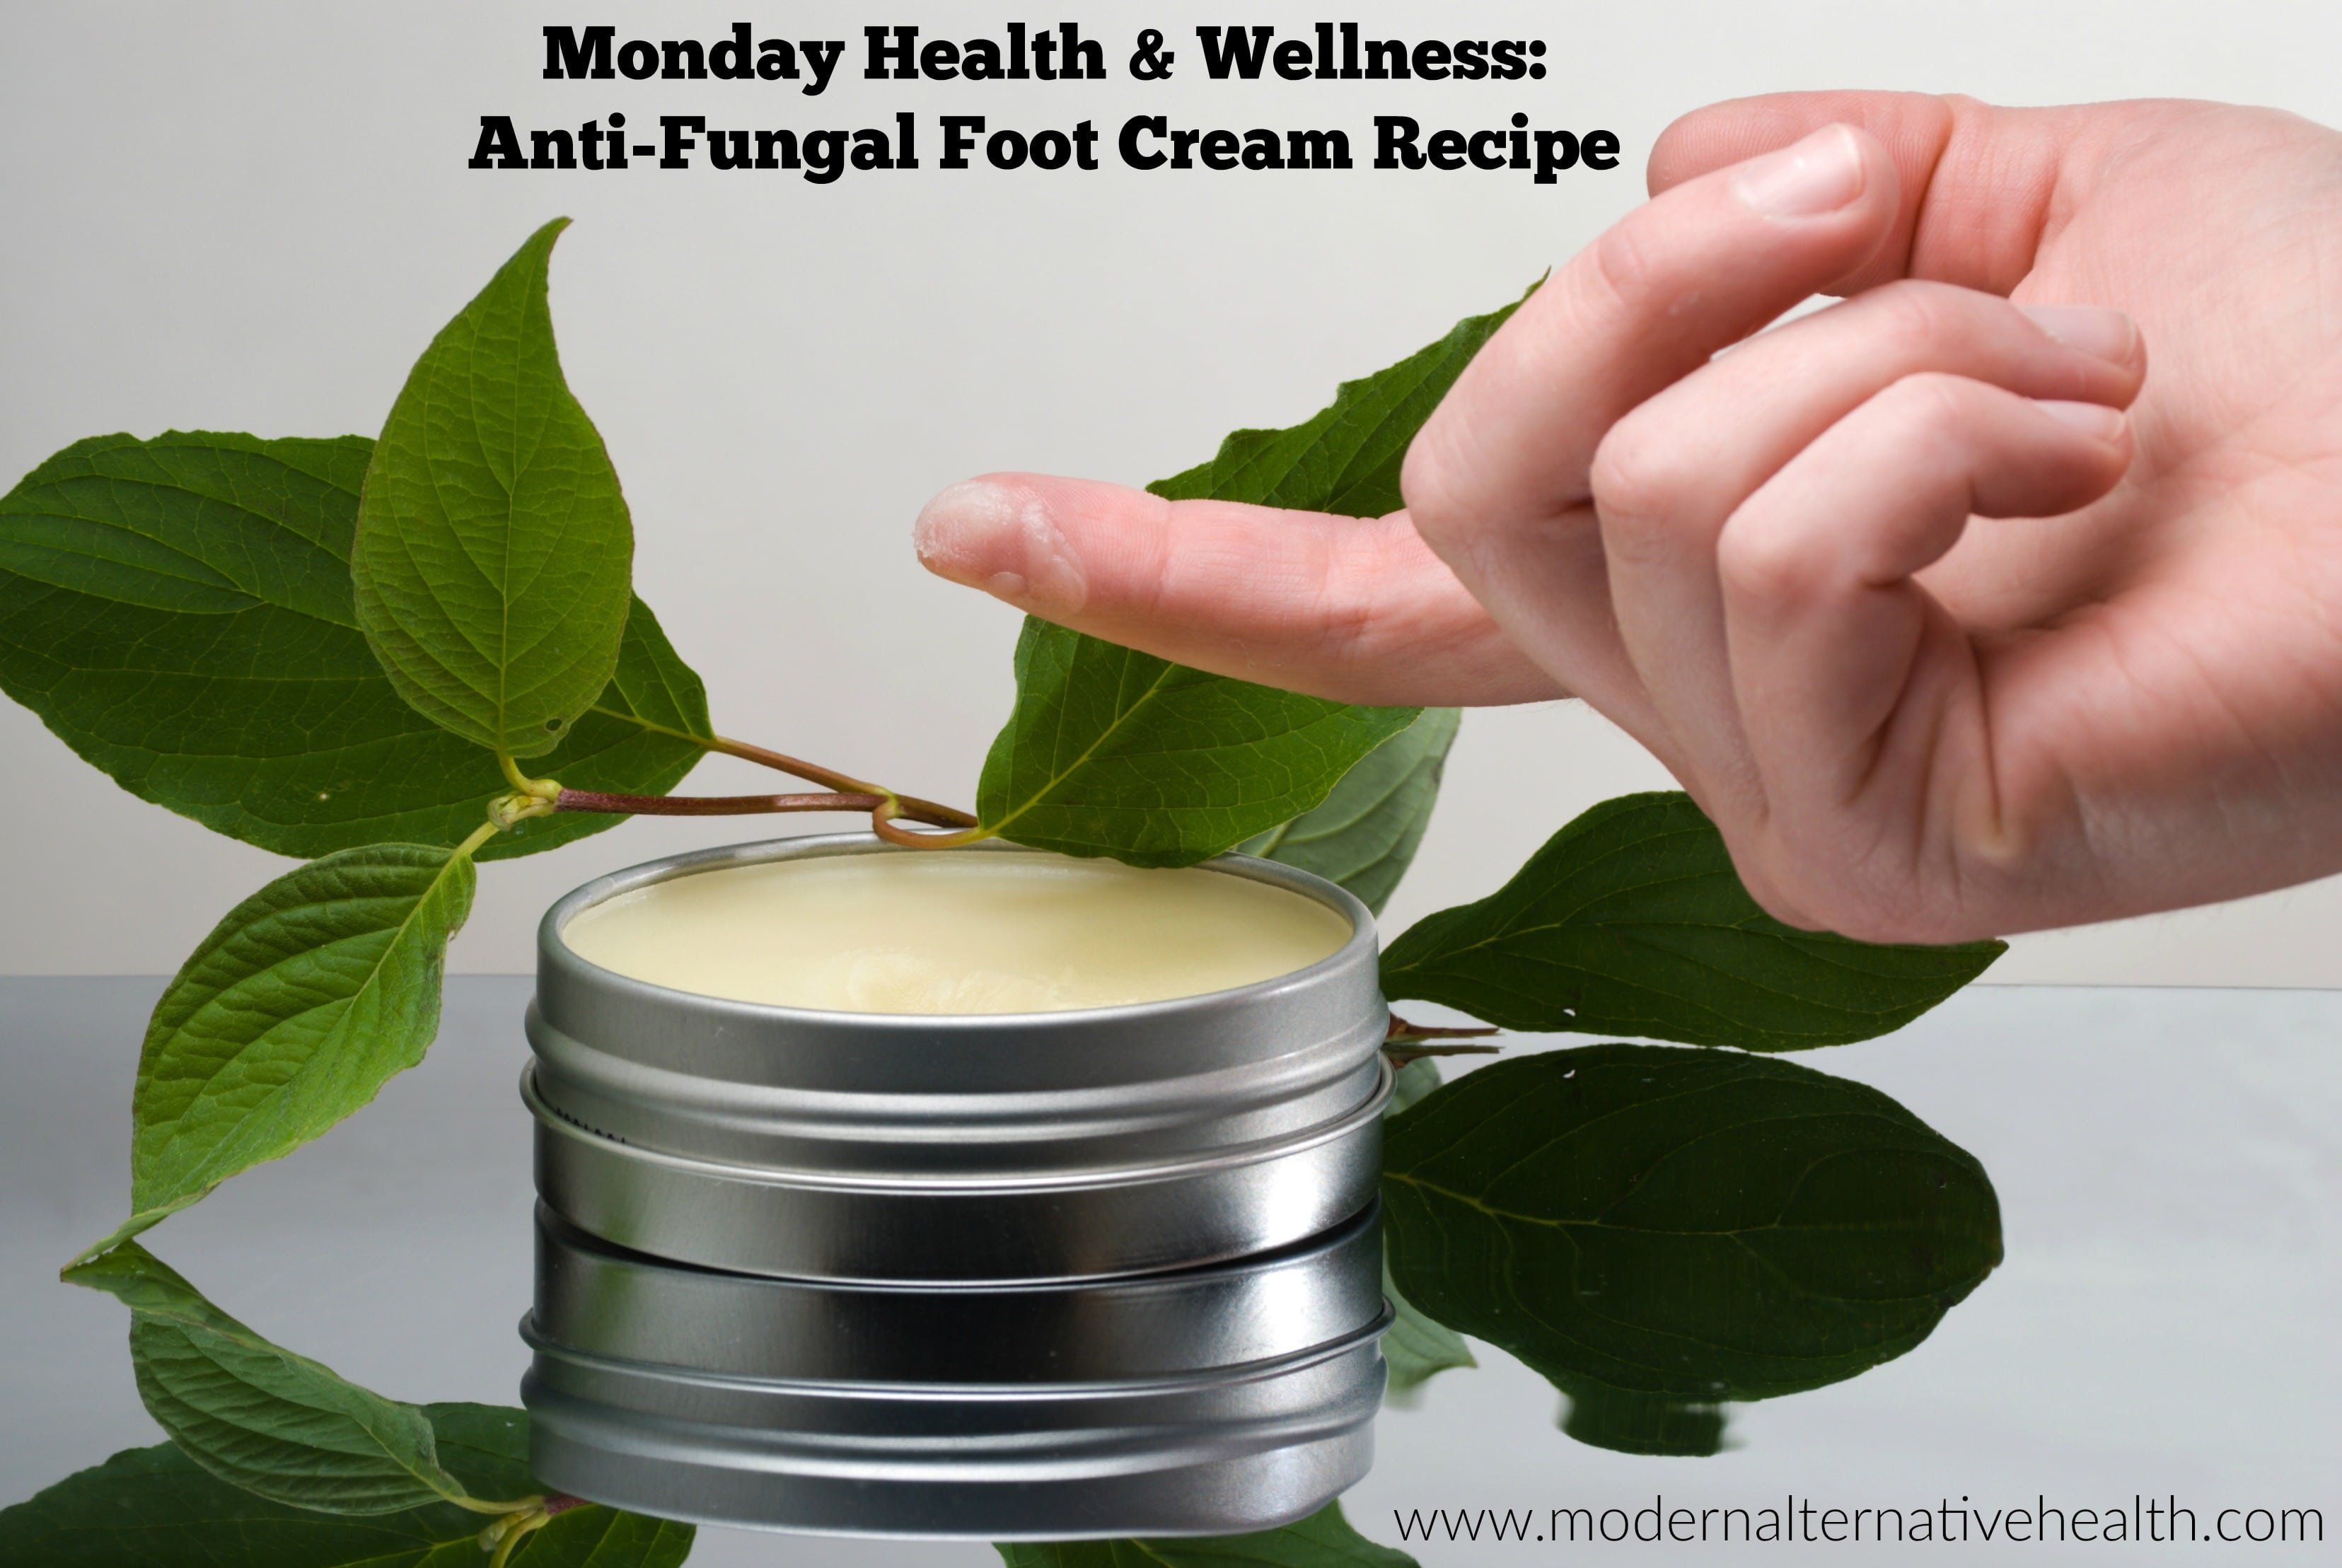 Monday Health & Wellness Anti-Fungal Foot Cream Recipe